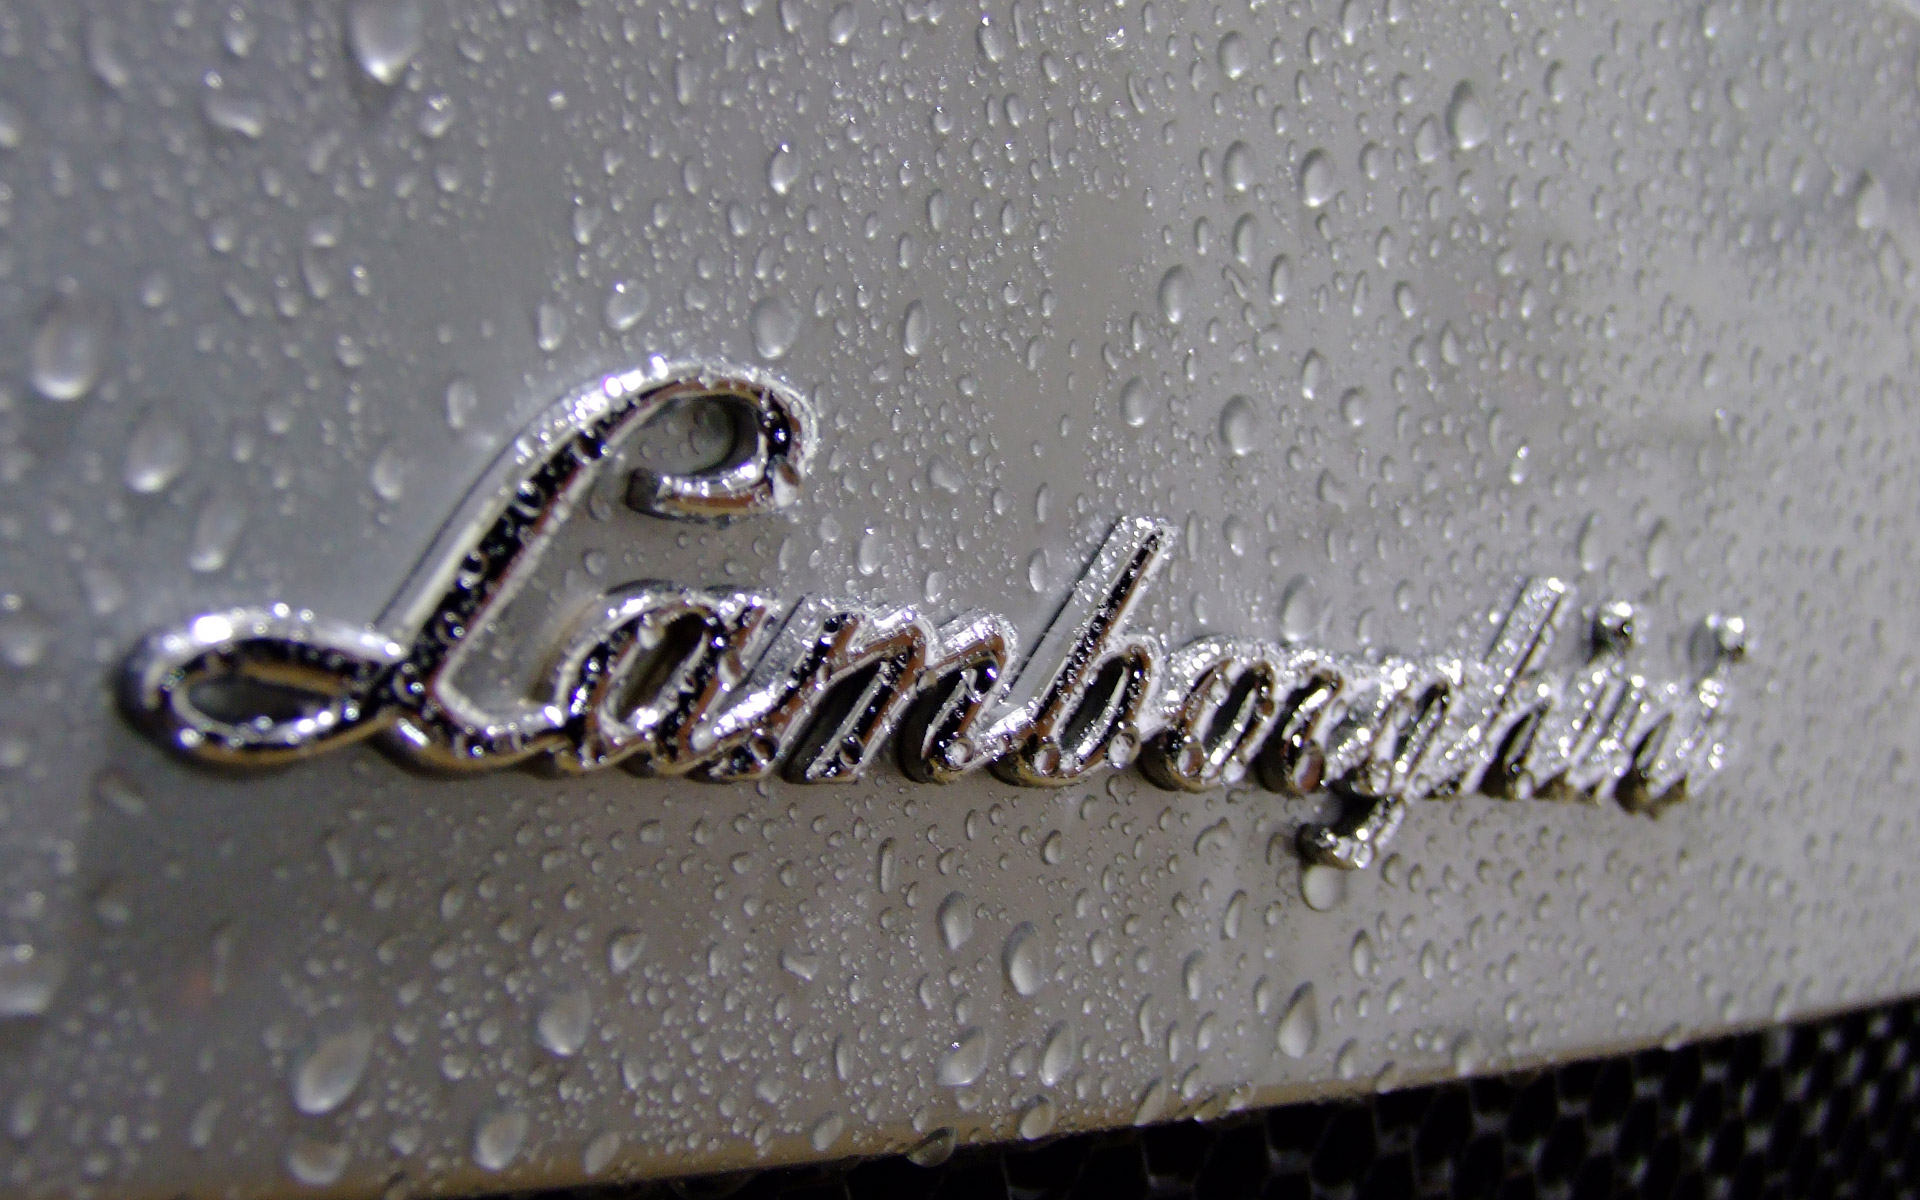 Descarga gratuita de fondo de pantalla para móvil de Lamborghini, Vehículos.